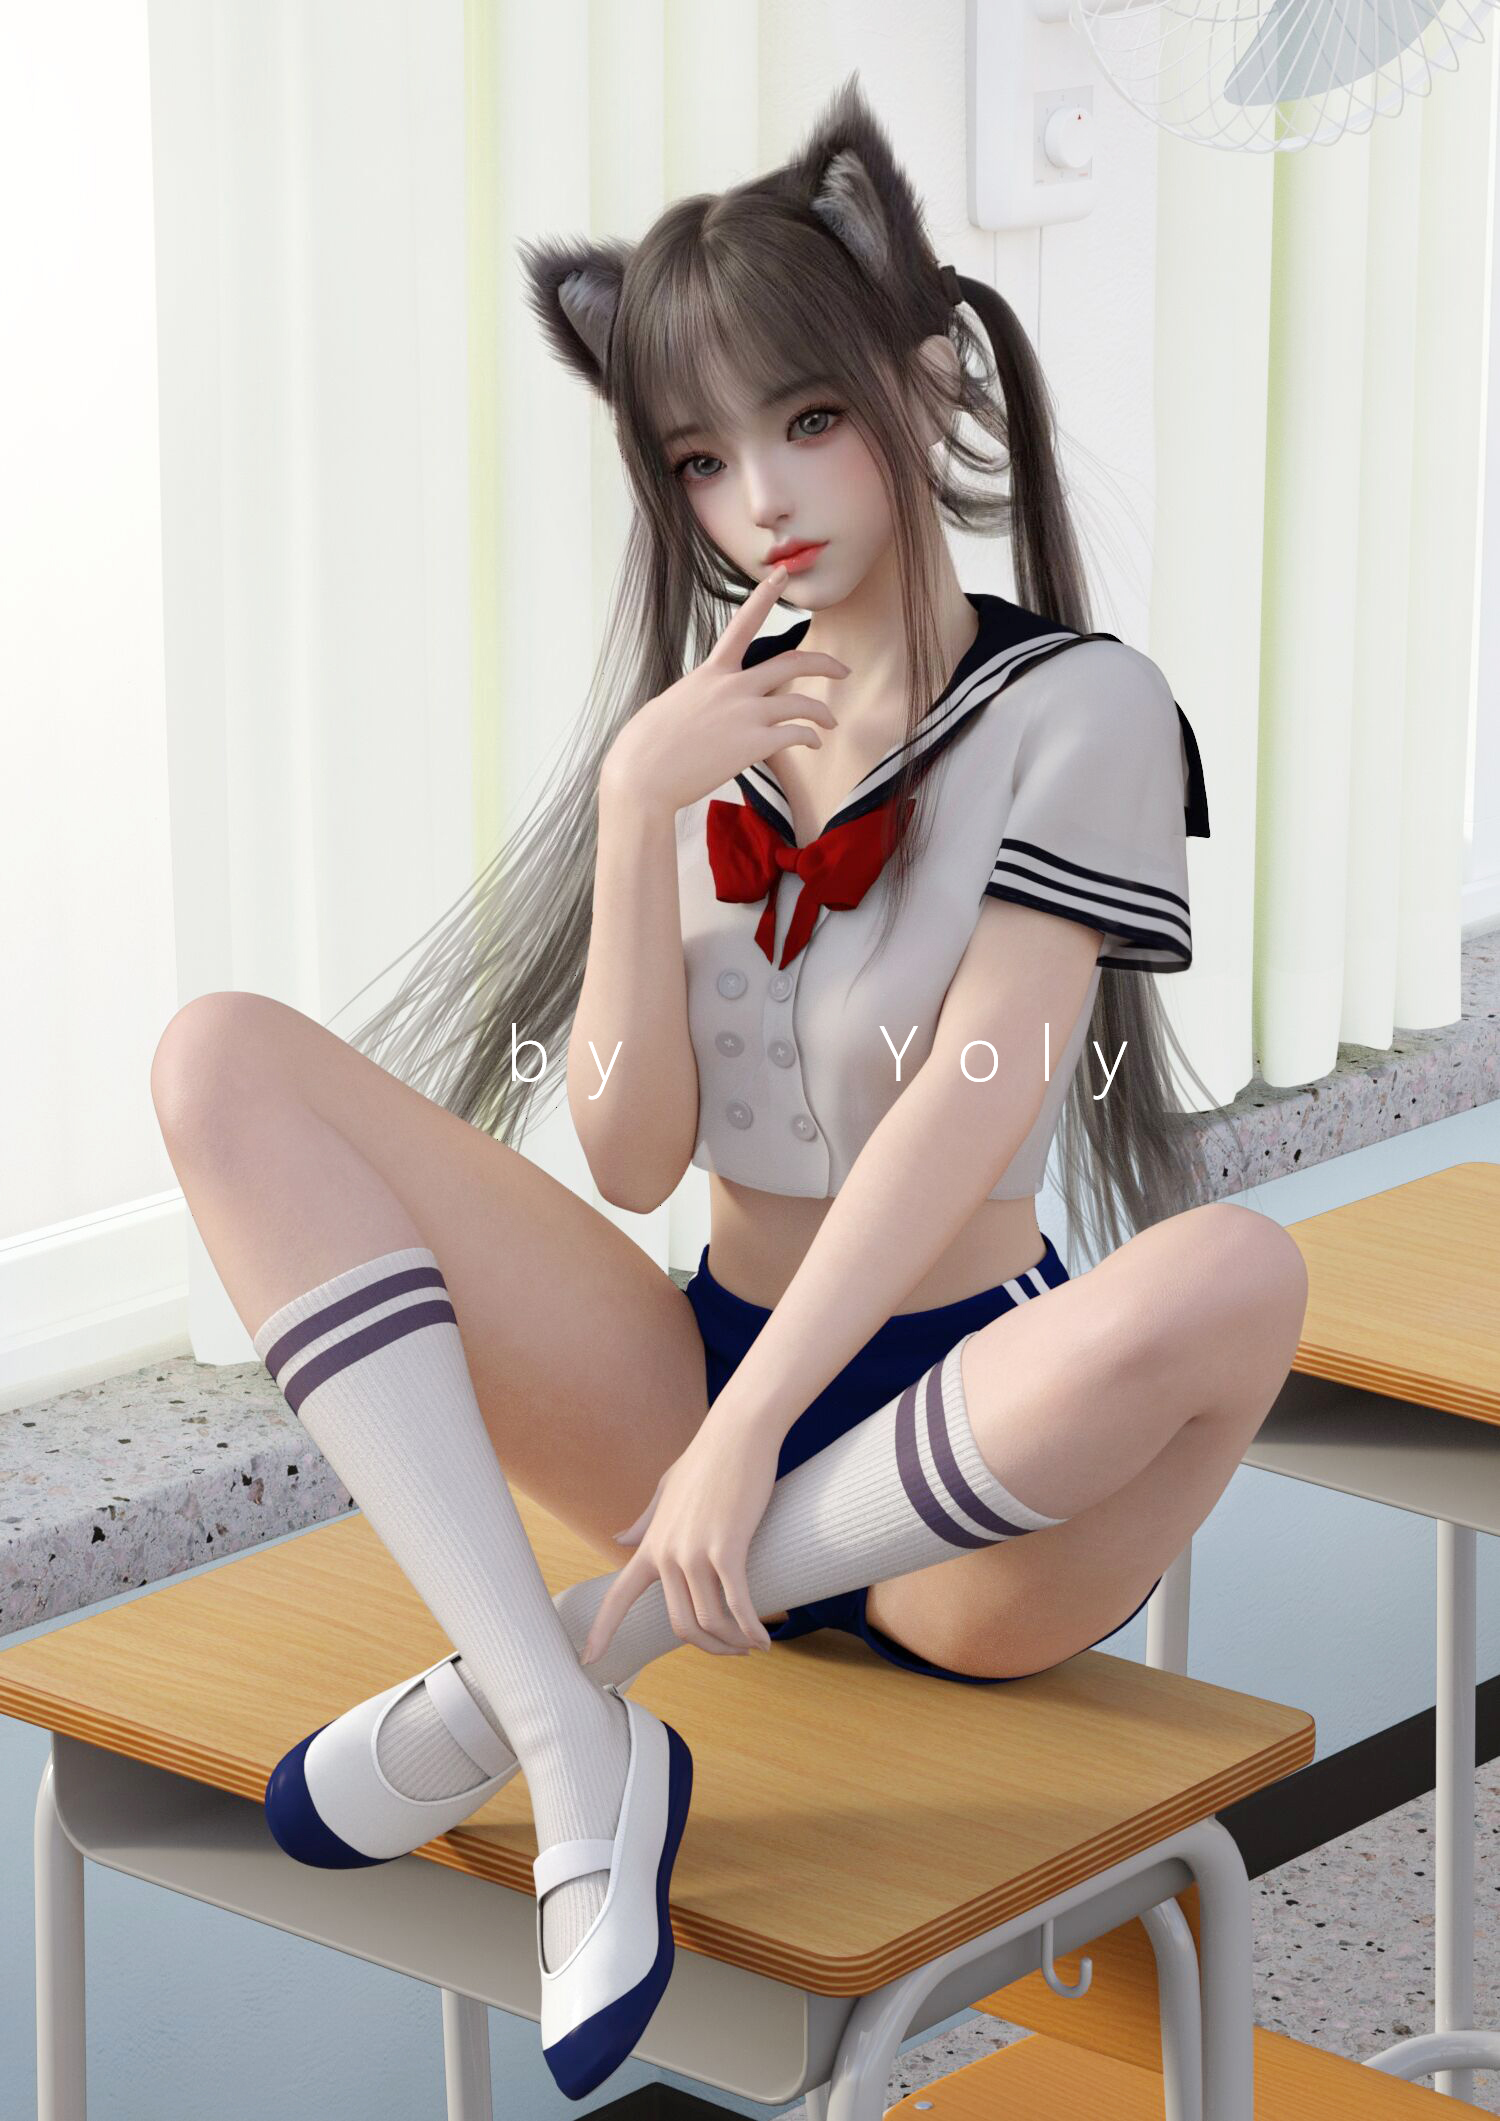 Yoly CGi Digital Art Asian Women School Skirt Schoolgirl School Girl Strikers School Uniform Classro 1500x2121